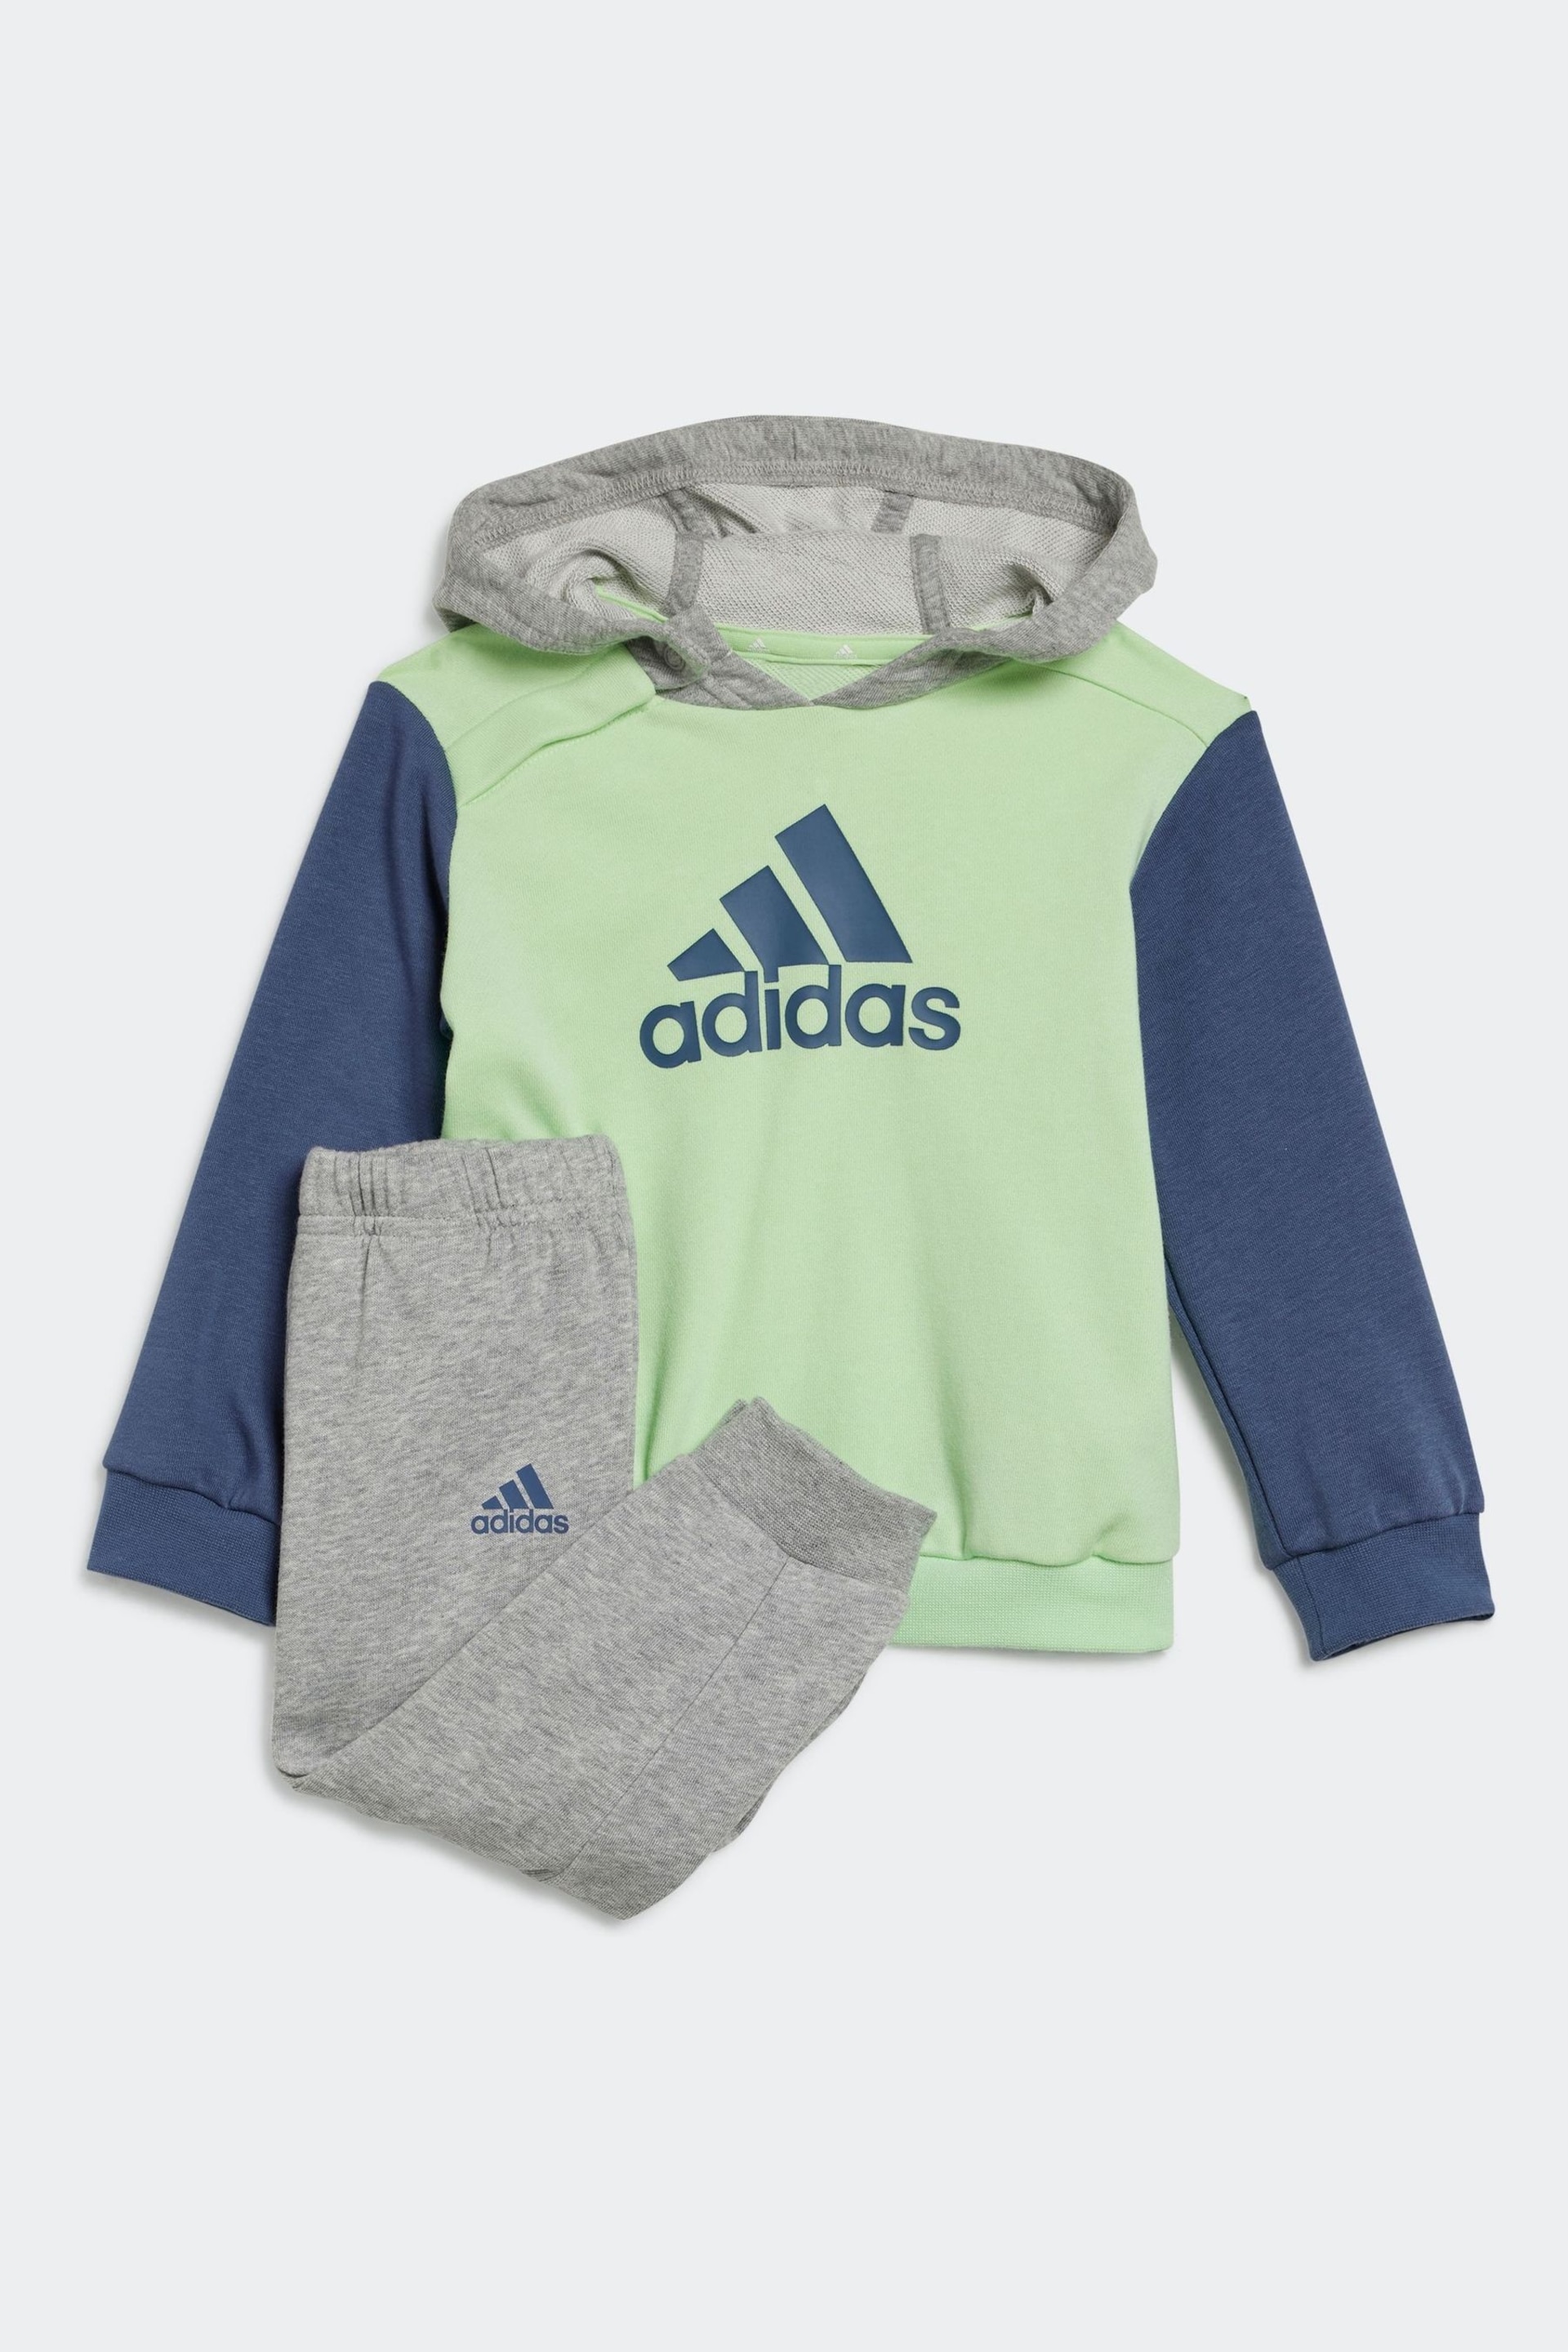 adidas Green/Grey Kids Essentials Colorblock Jogger Set - Image 1 of 6